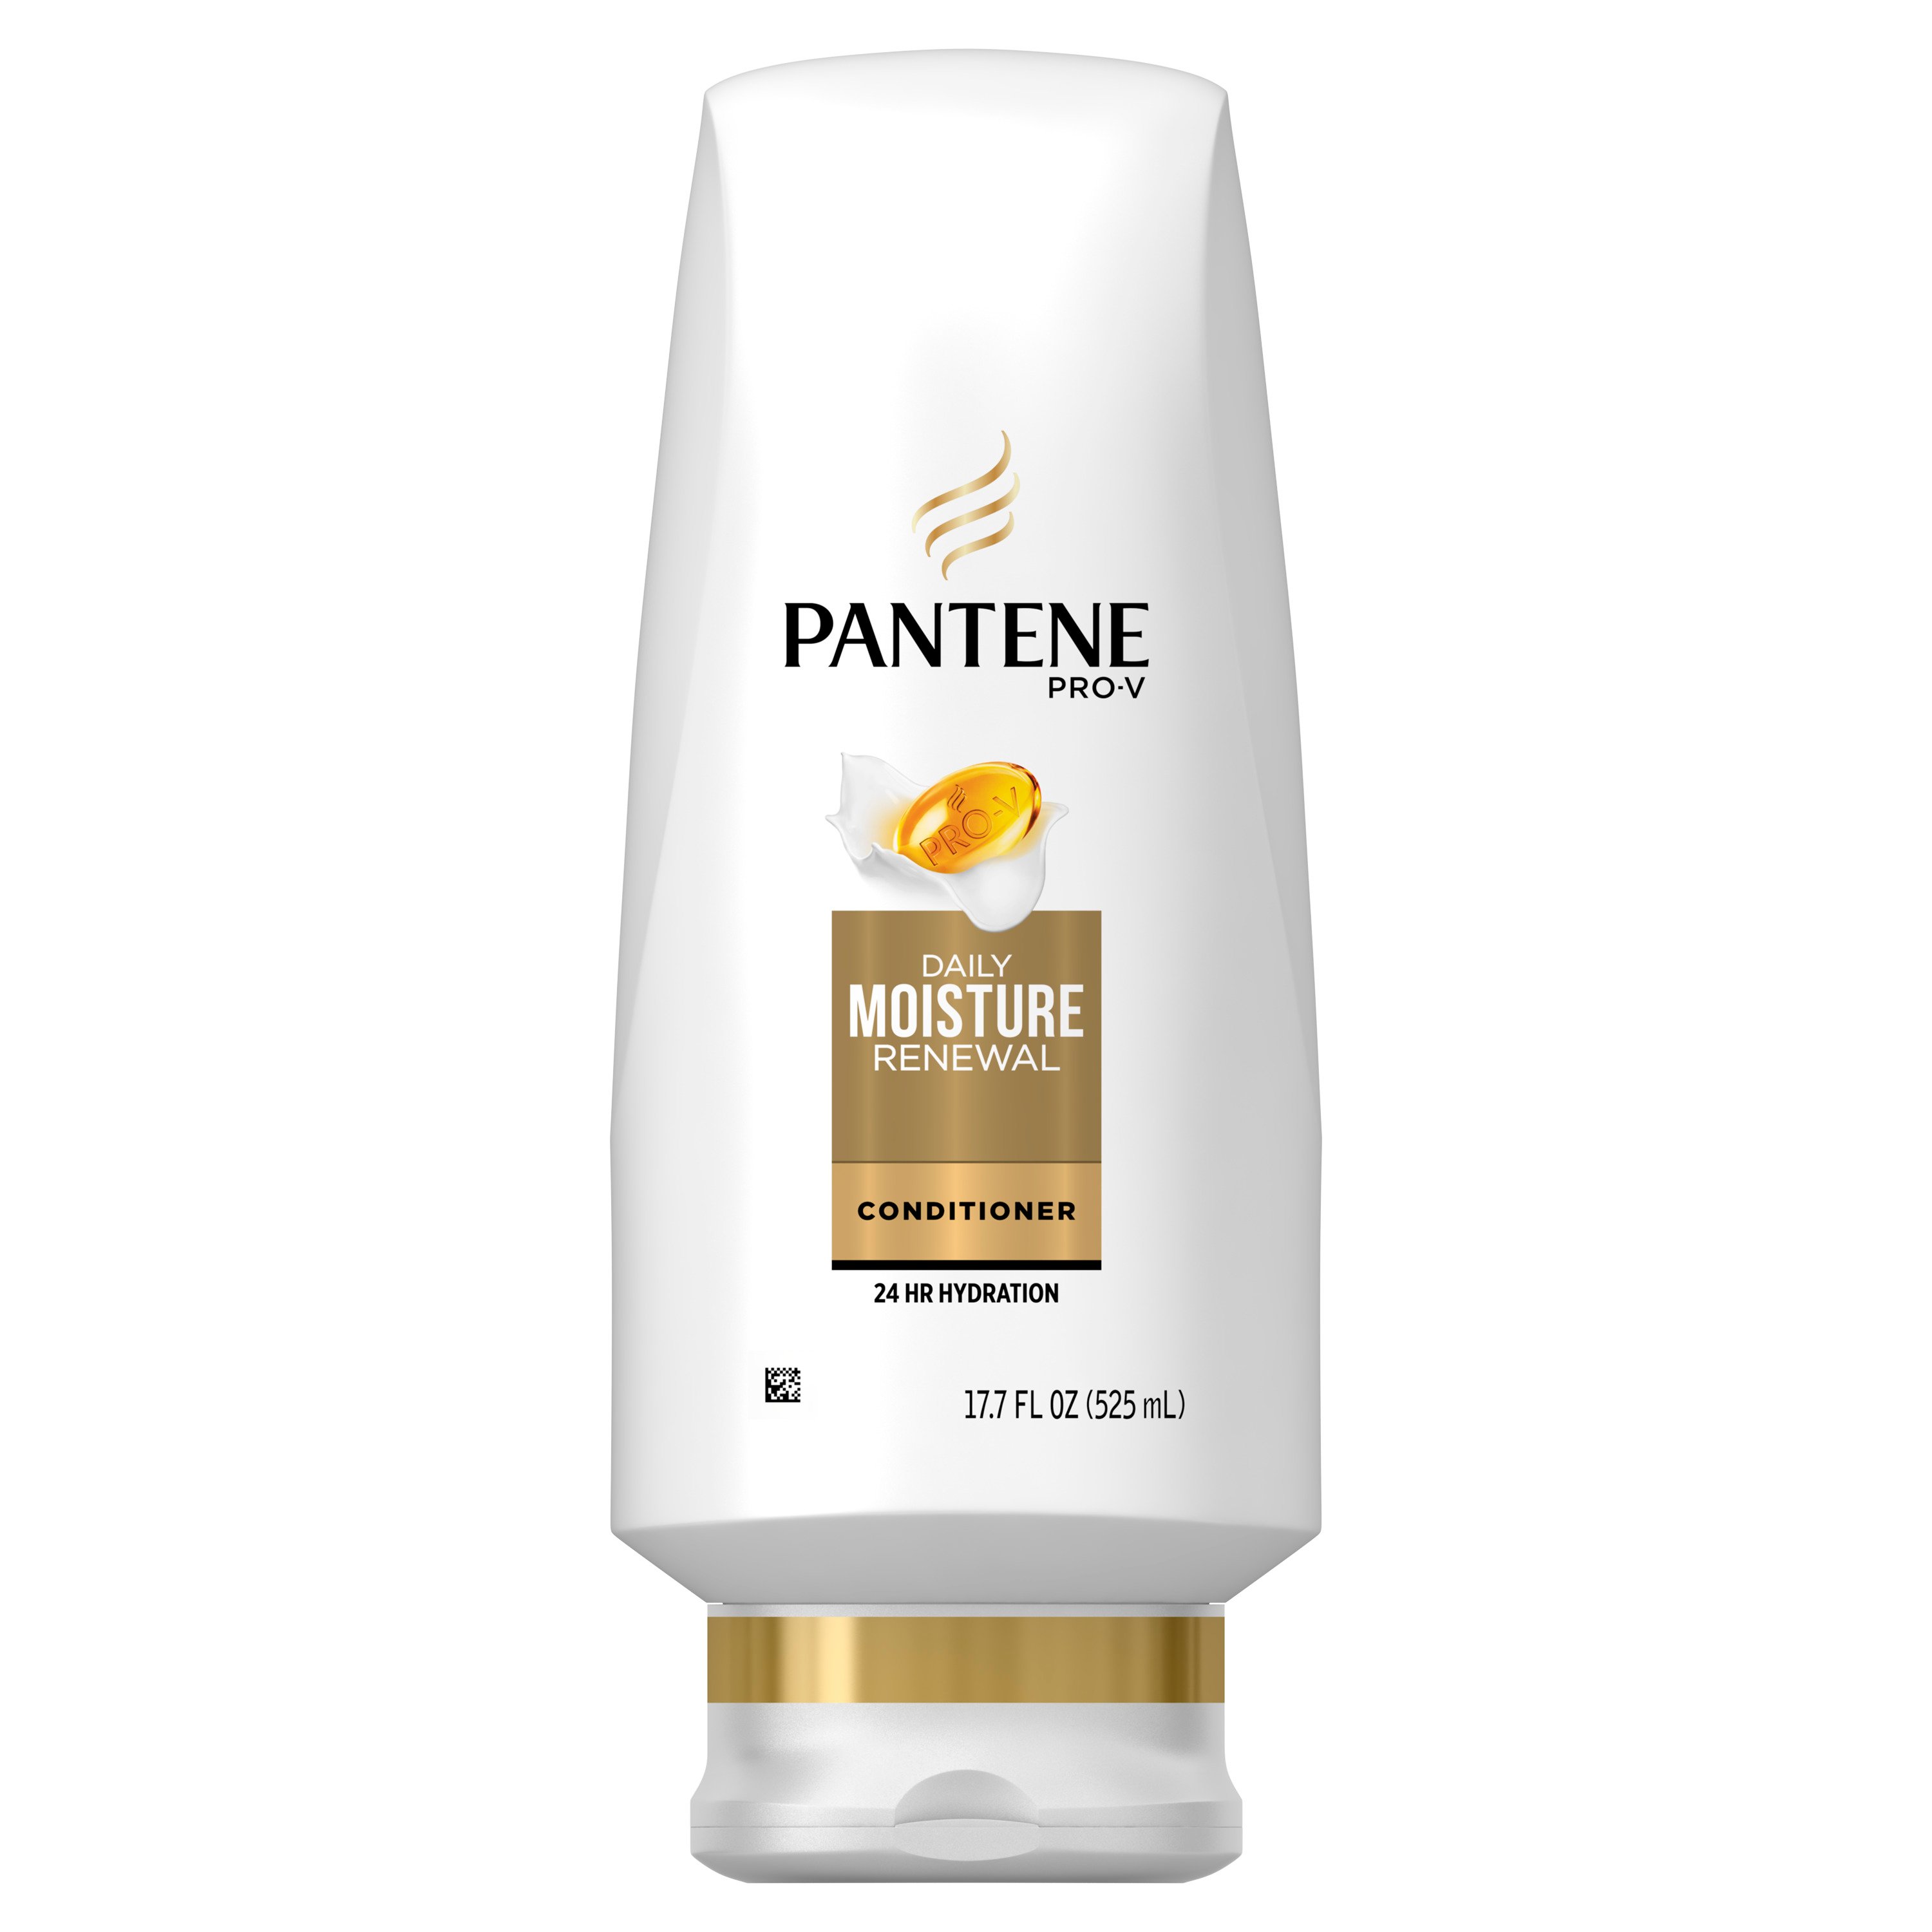 Pantene Pro V Daily Moisture Renewal Conditioner Shop Shampoo Conditioner At H E B